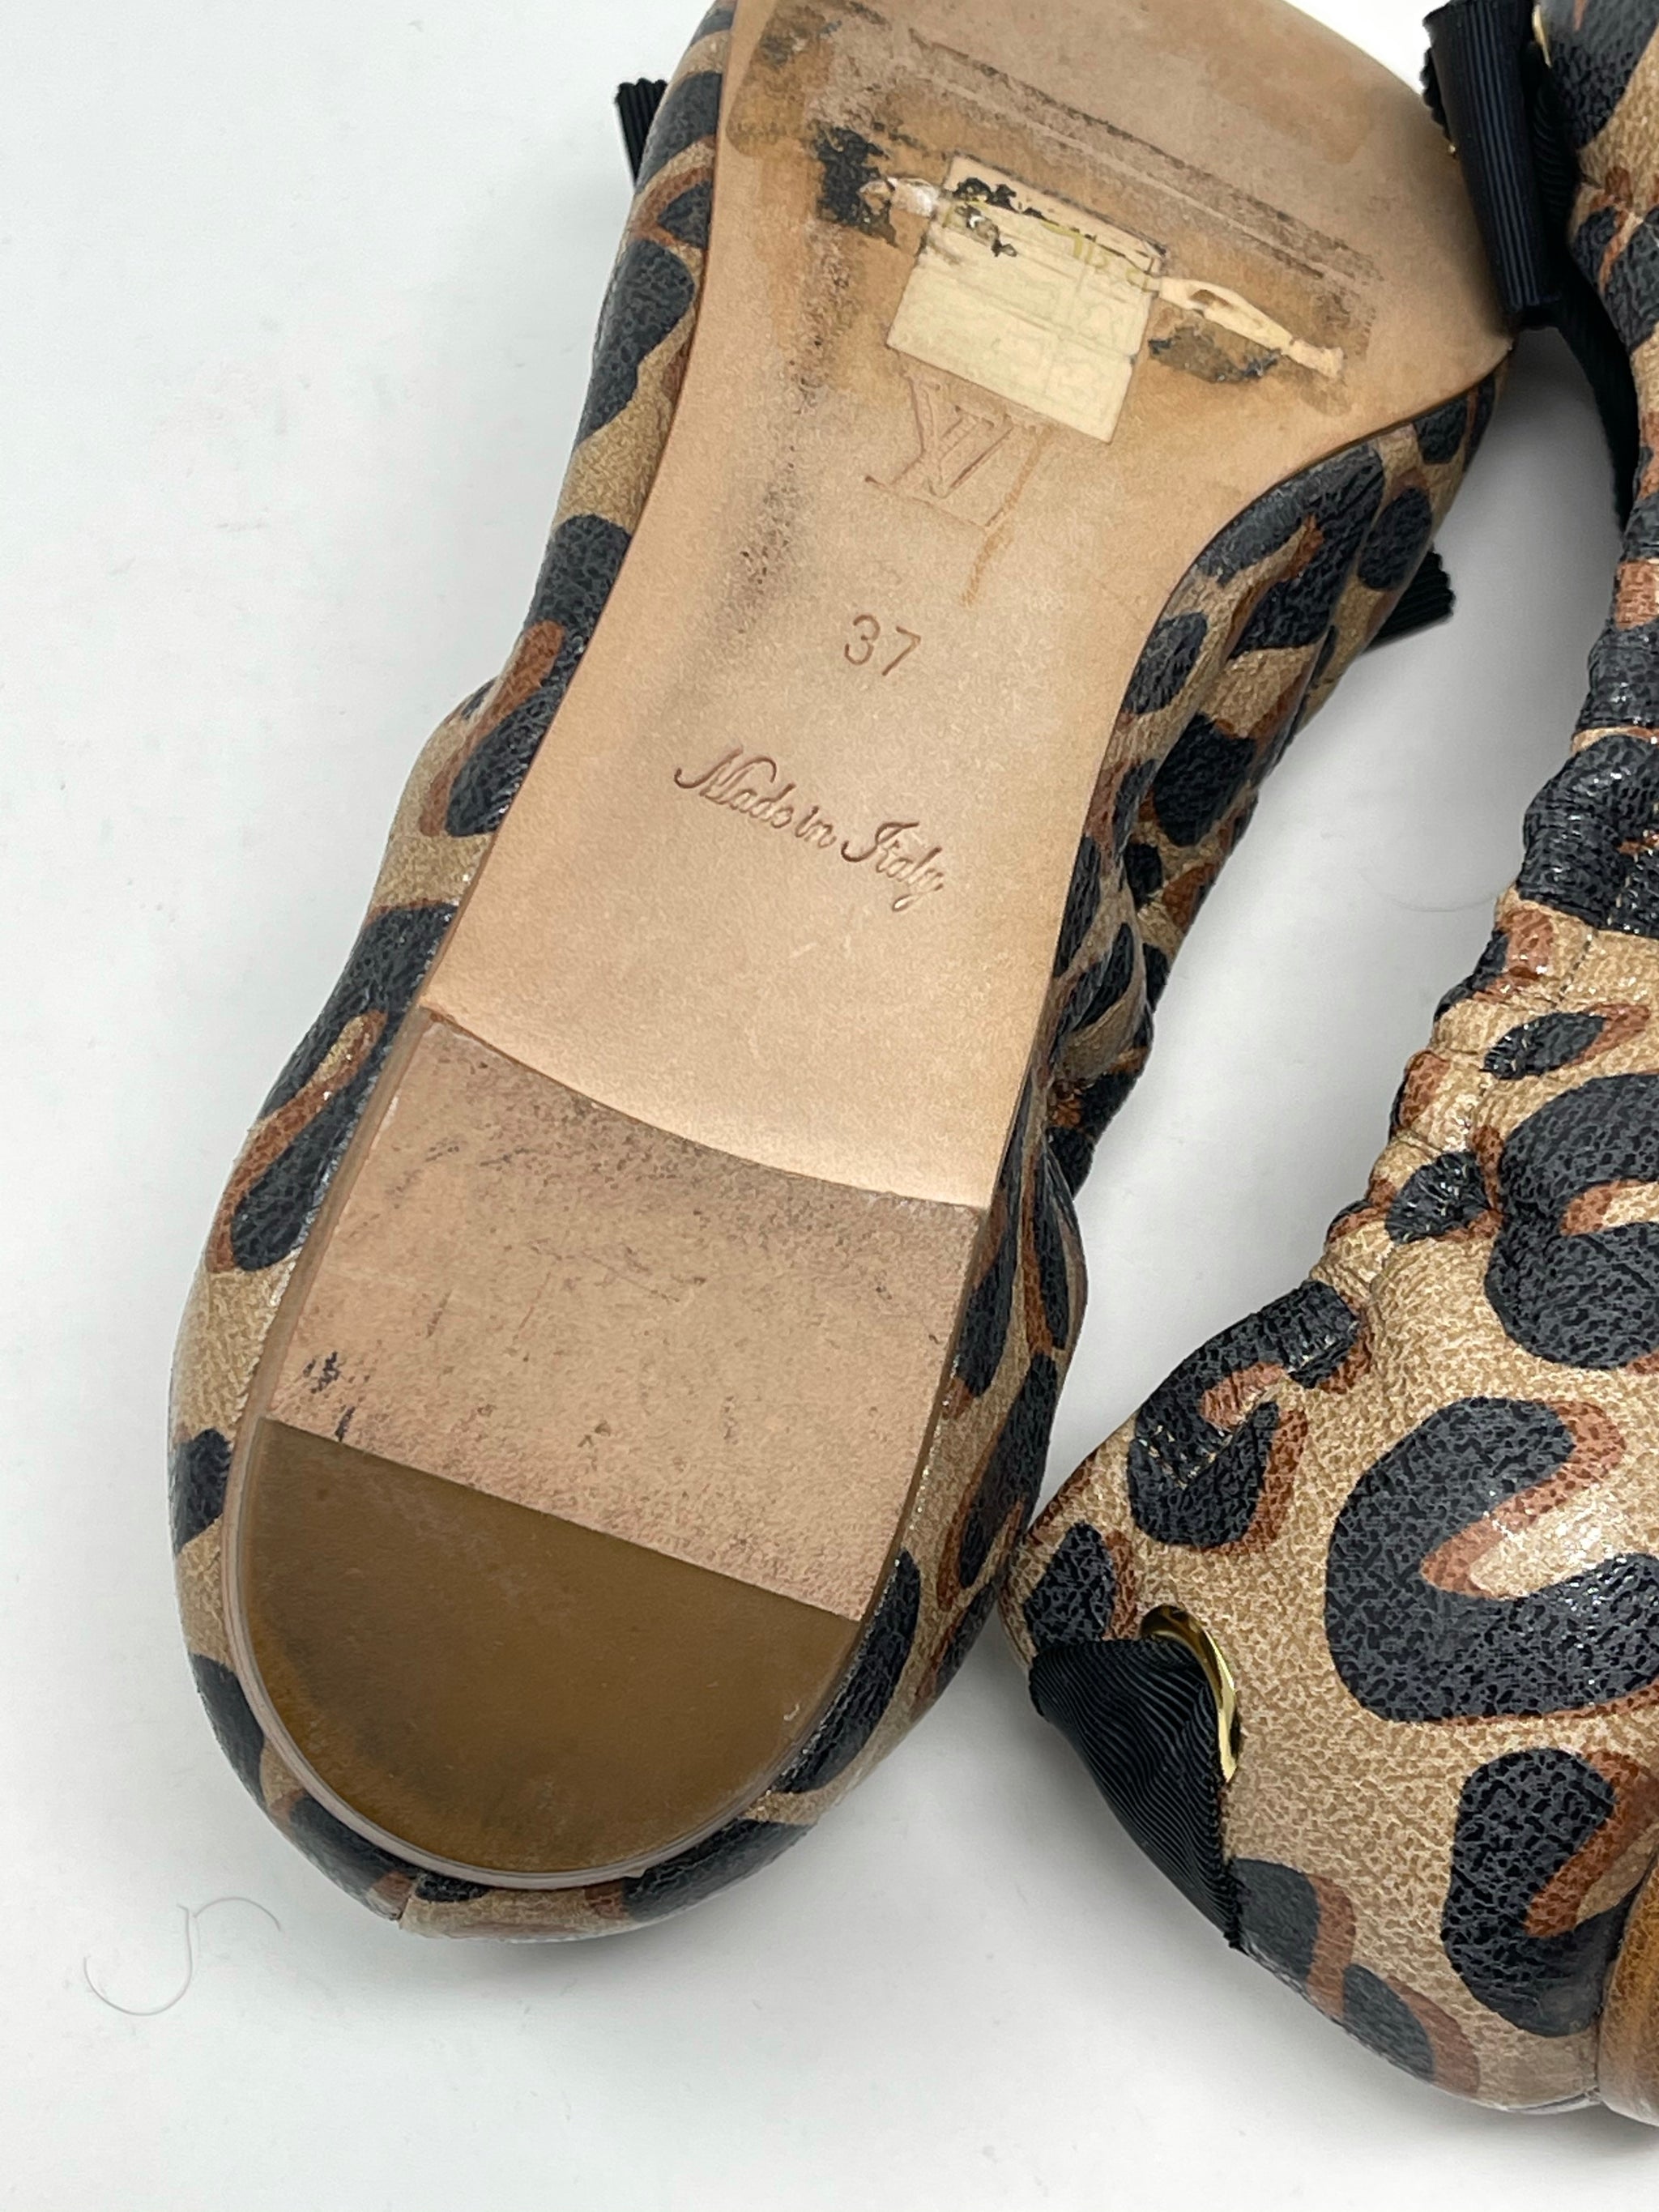 Louis Vuitton Leopard Dauphine Ballerina Flats - Ann's Fabulous Closeouts